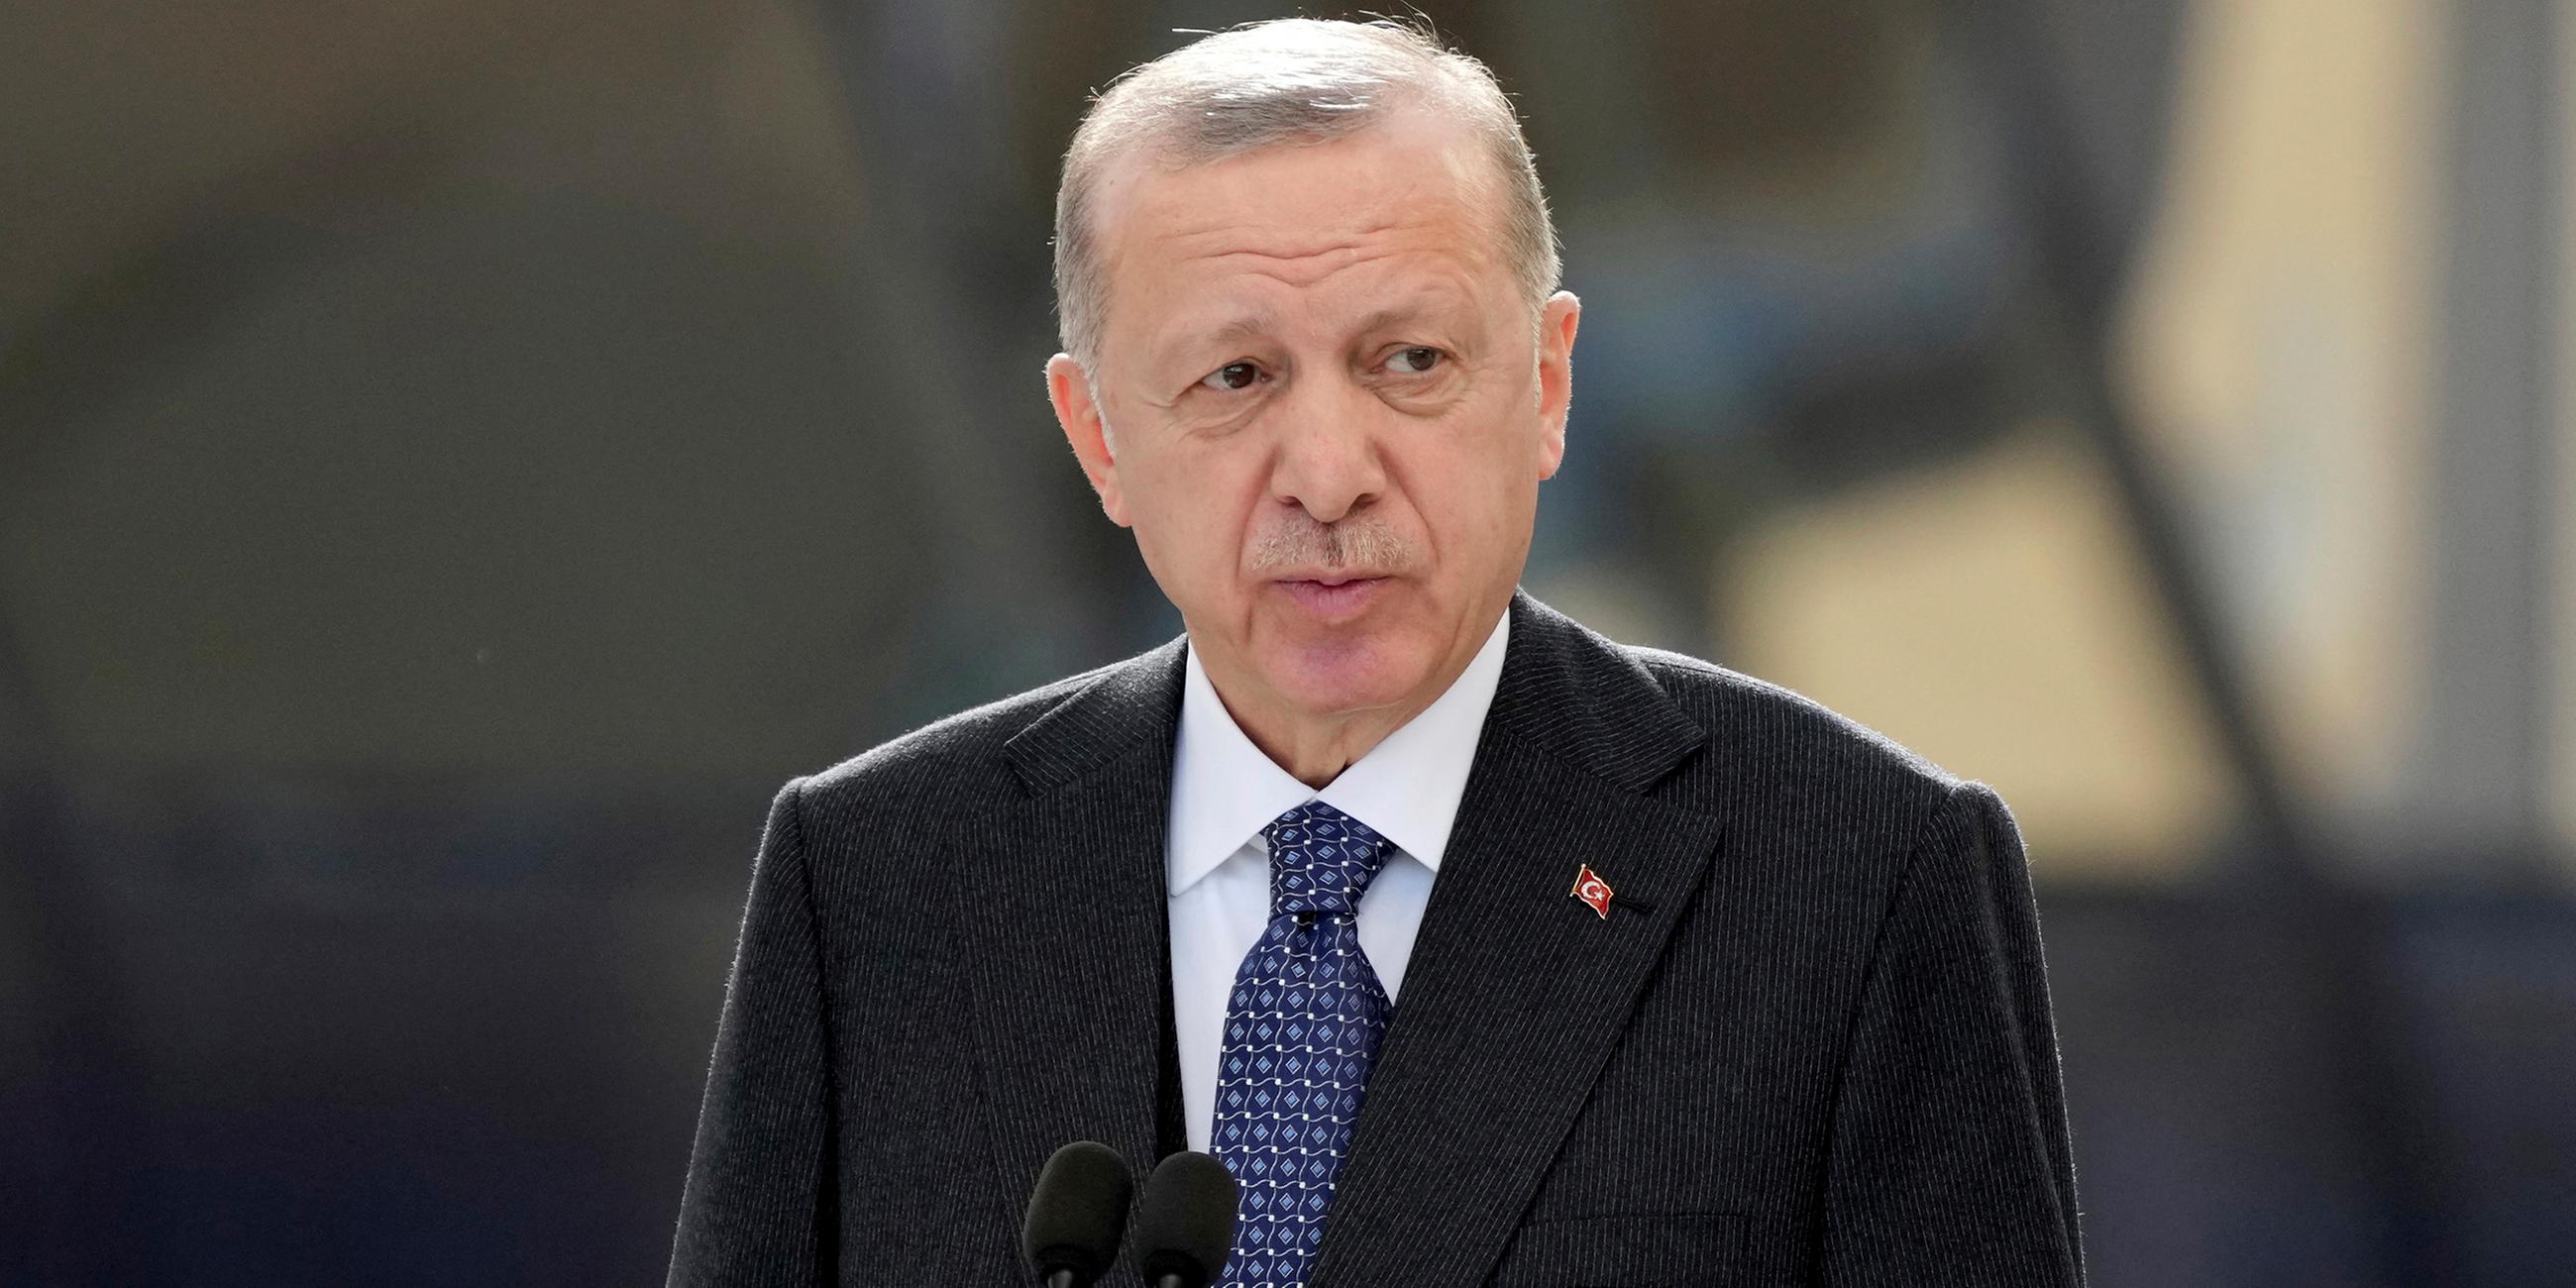 Recep Tayyip Erdogan am 15.02.2022 in Dubai